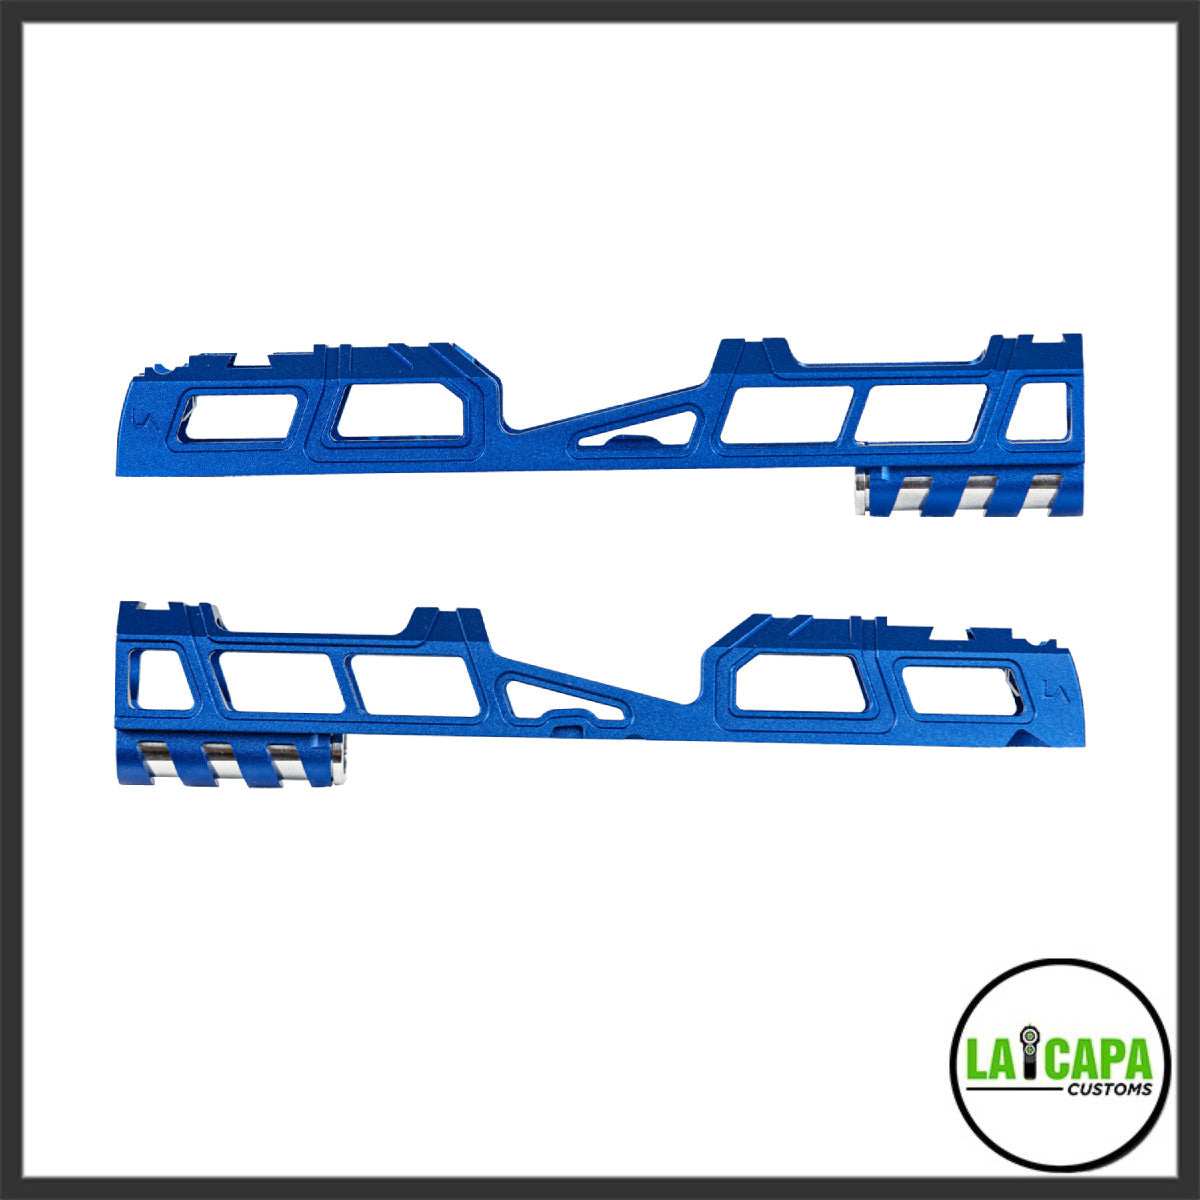 LA Capa Customs 5.1 “Hyper” Aluminum Slide - Blue